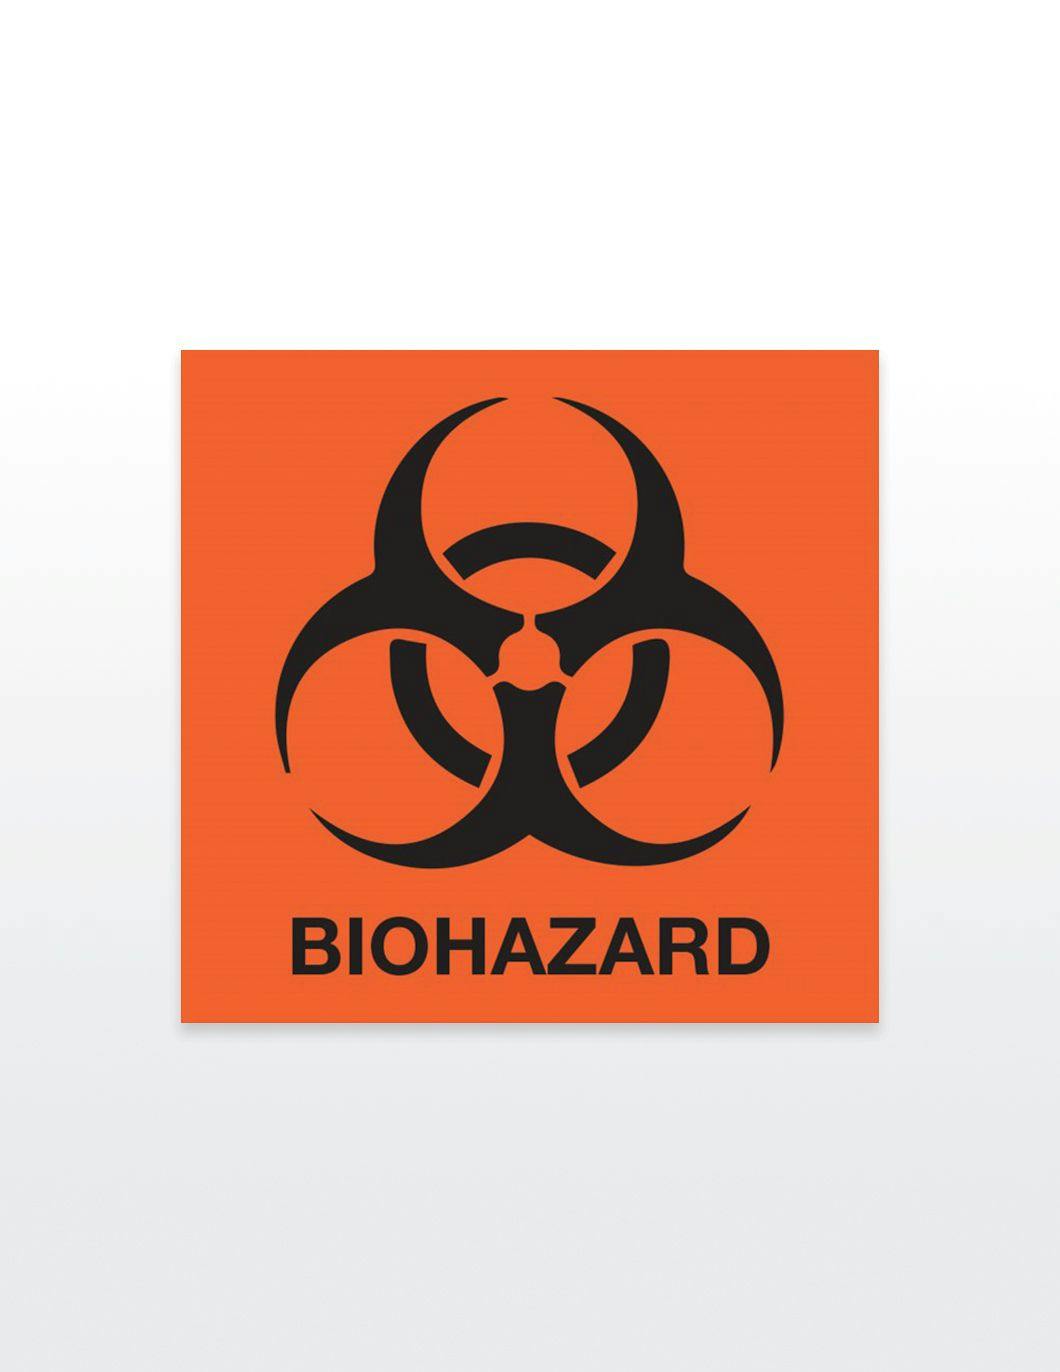 3x3-biohazard-labels